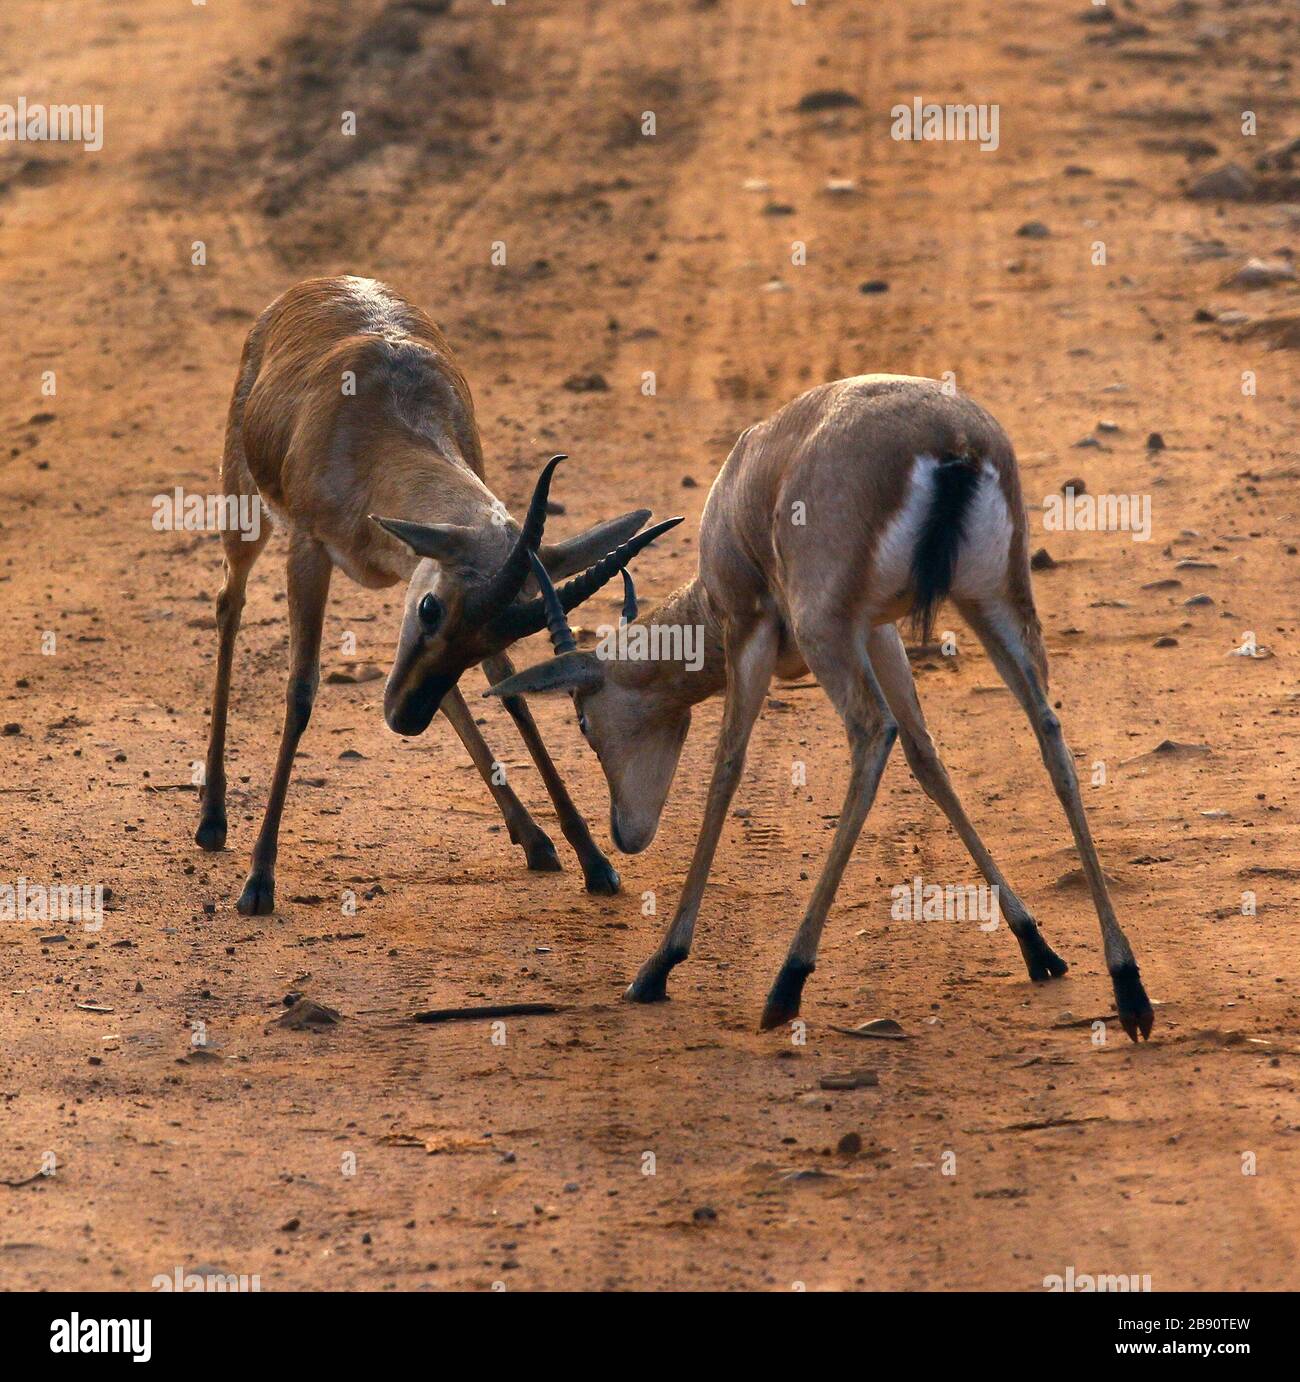 Gazelle indiano Foto Stock